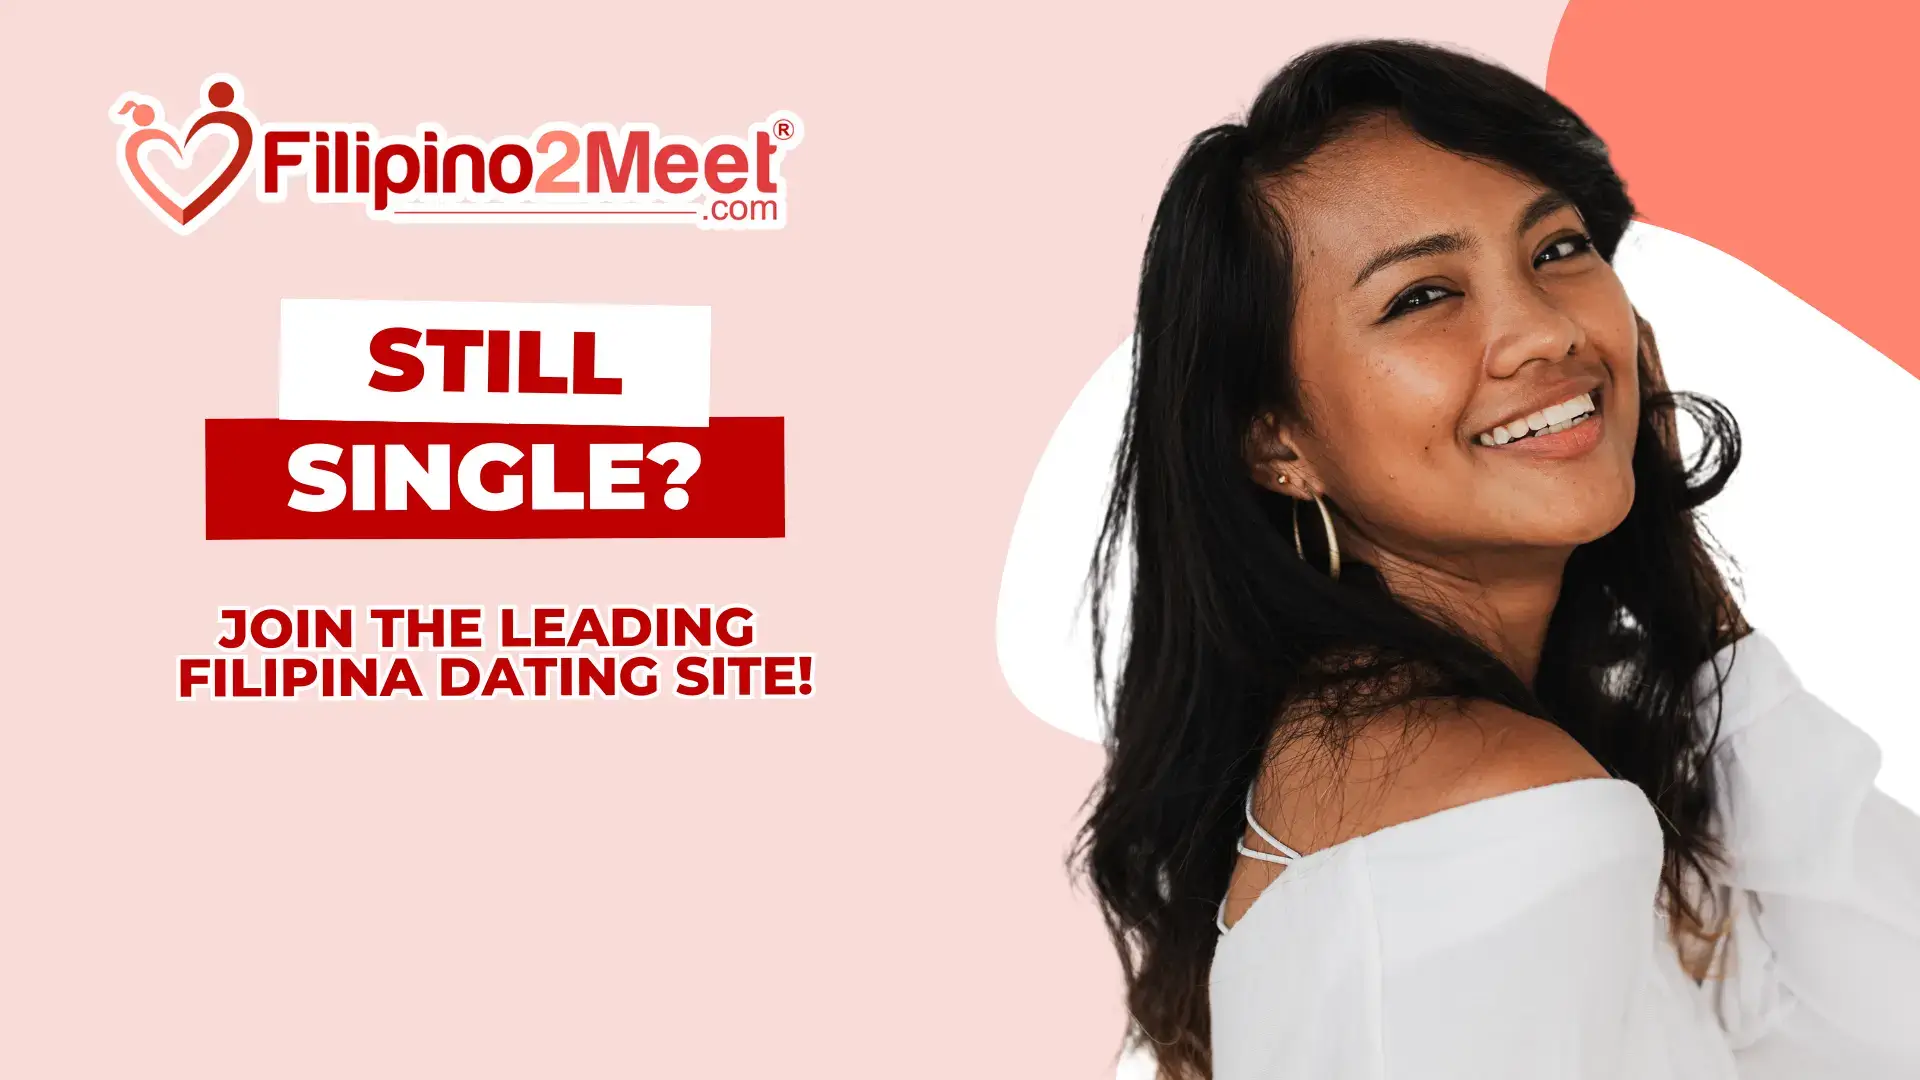 Filipina Dating - Filipinos2Meet - Philippines Dating